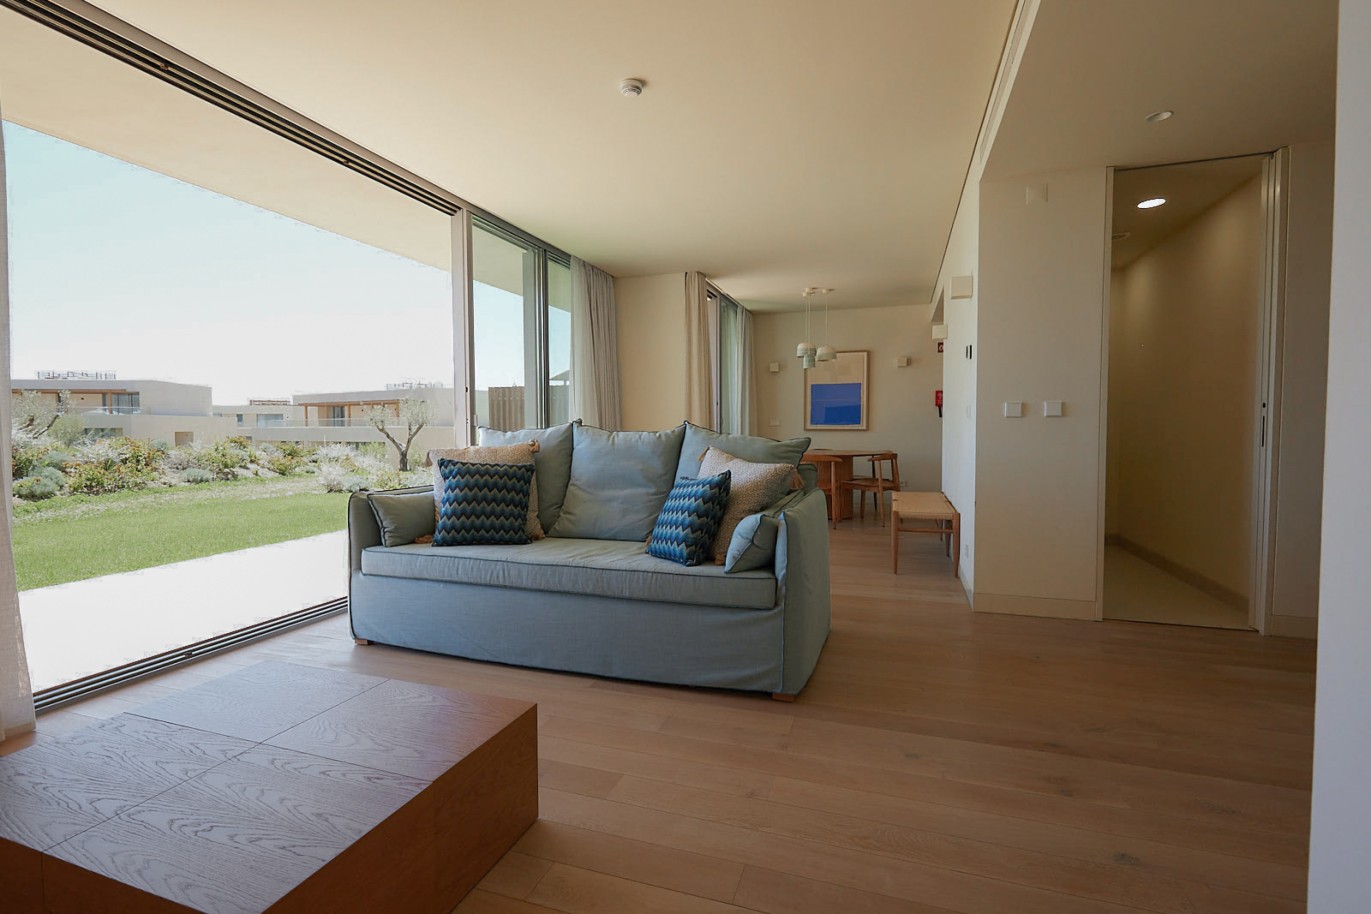 2 bedroom apartment in resort, for sale in Porches, Algarve_229205